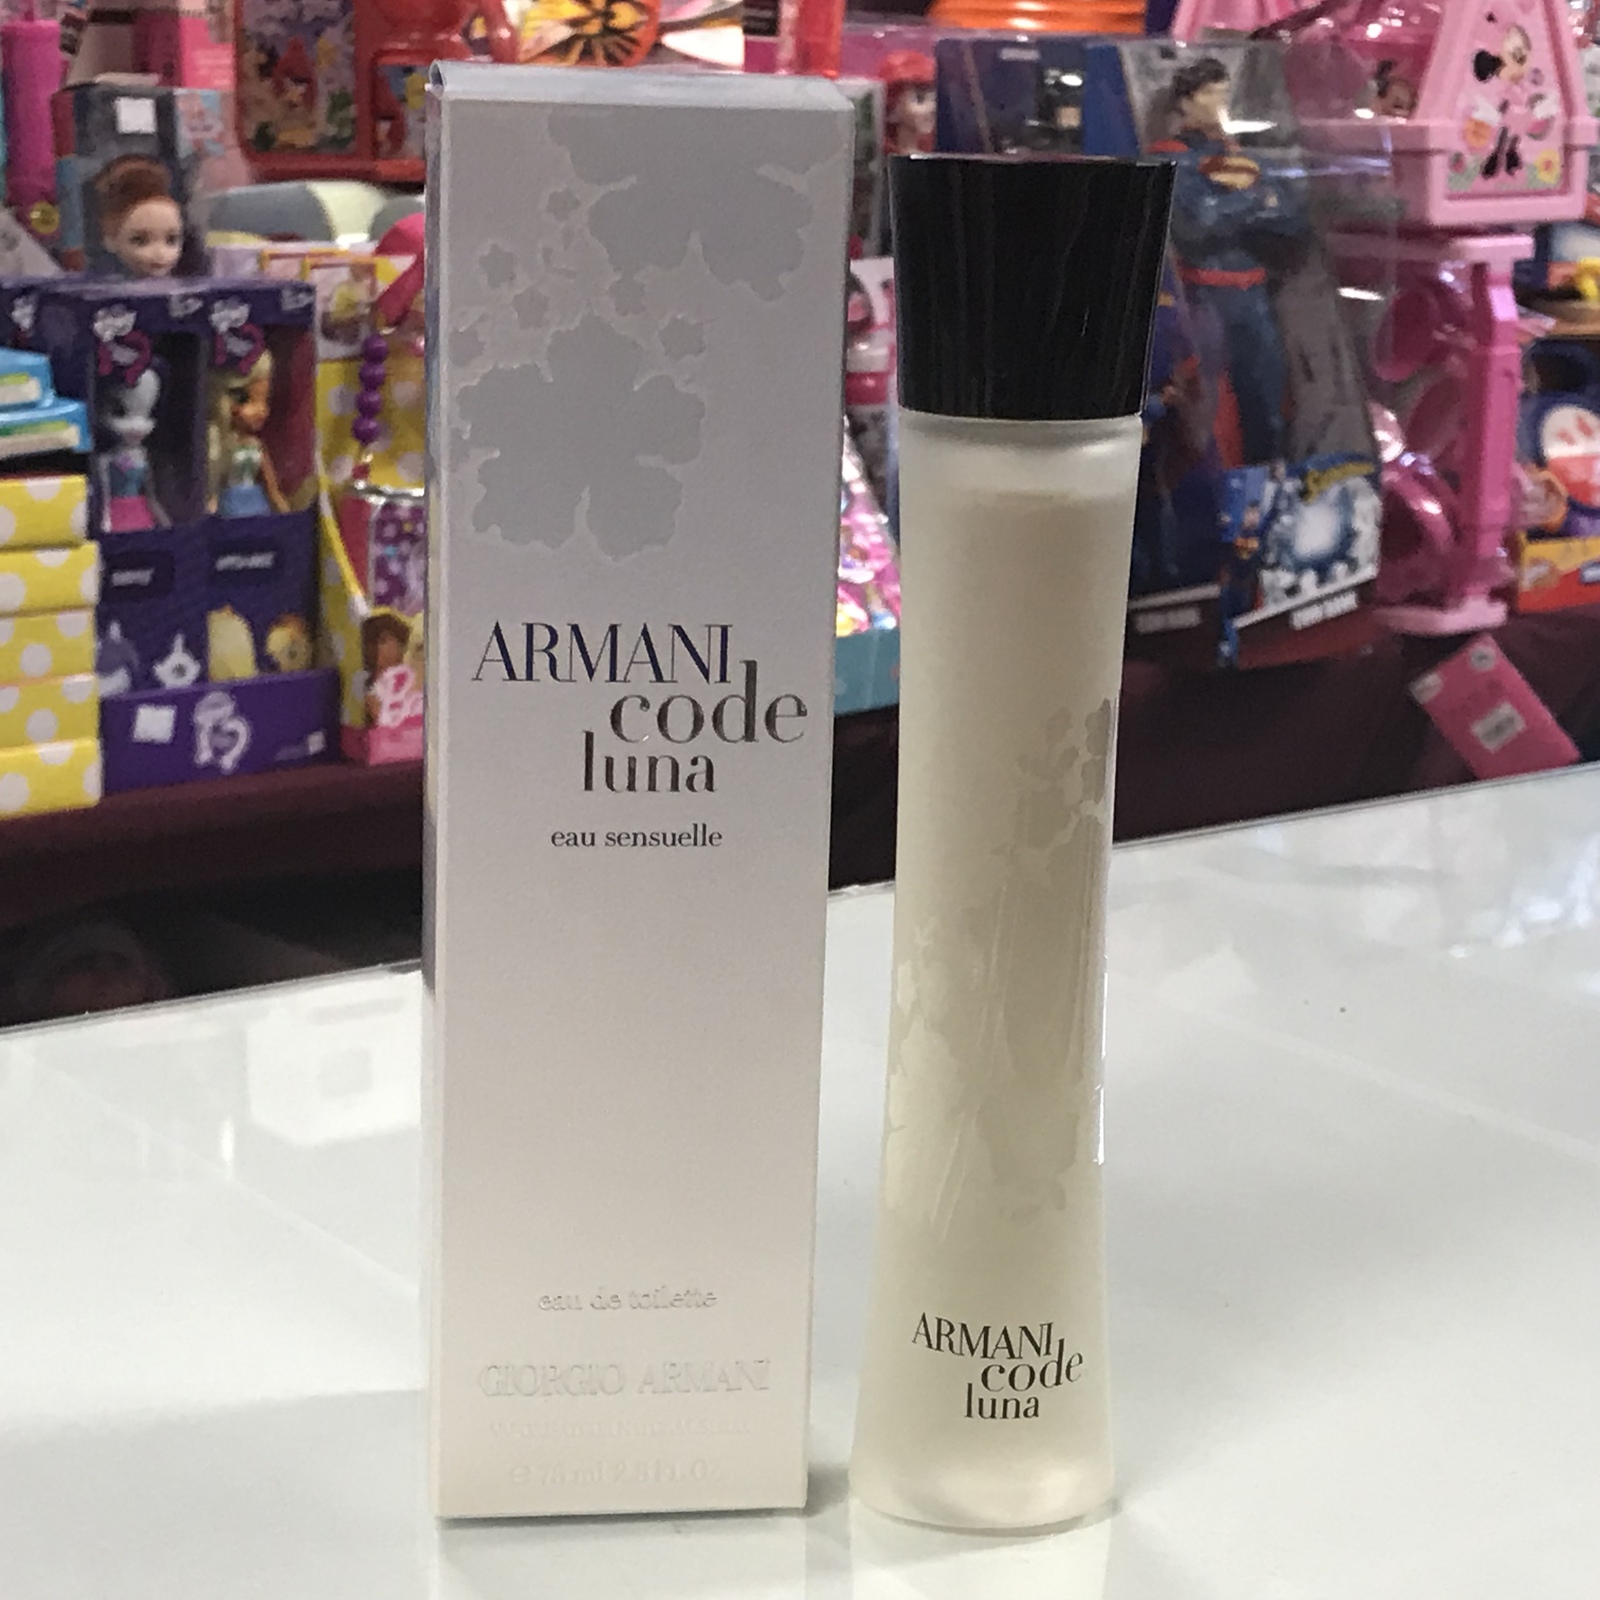 Armani Code Luna eau Sensuelle by Giorgio Armani Women 2.5 oz / 75 ml edt spray - $74.98